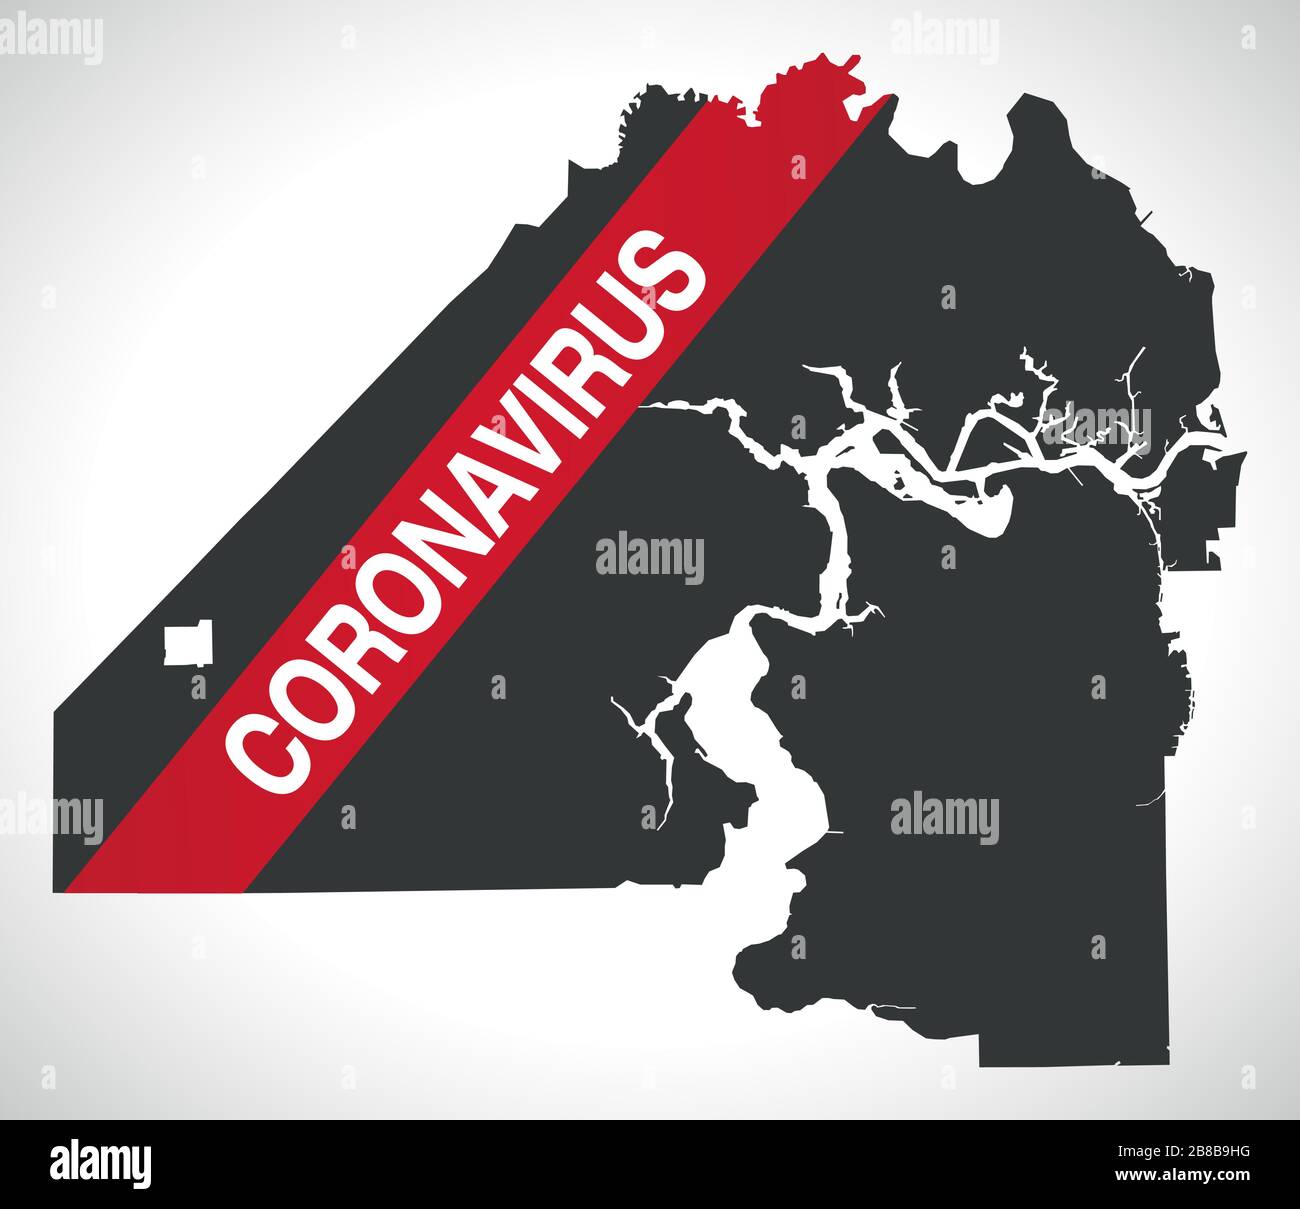 Jacksonville Florida City Map With Coronavirus Warning 2B8B9HG 